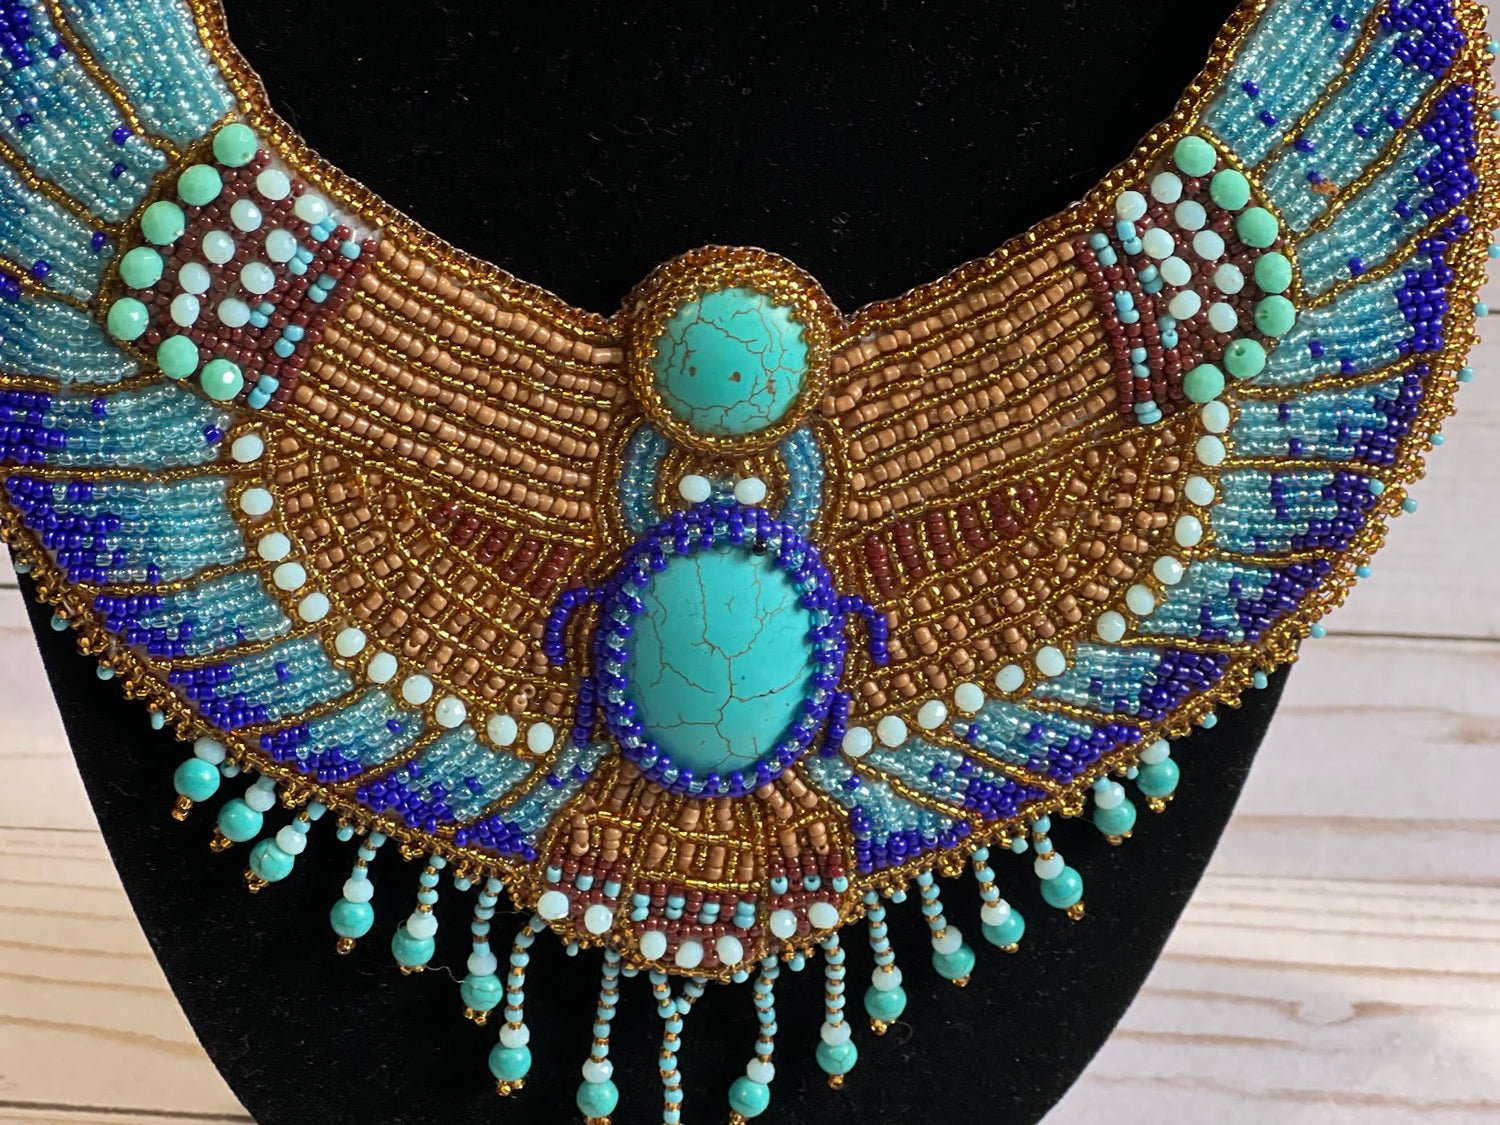 Limegreen egyptian style necklace | Shik-n-Bik | Flickr